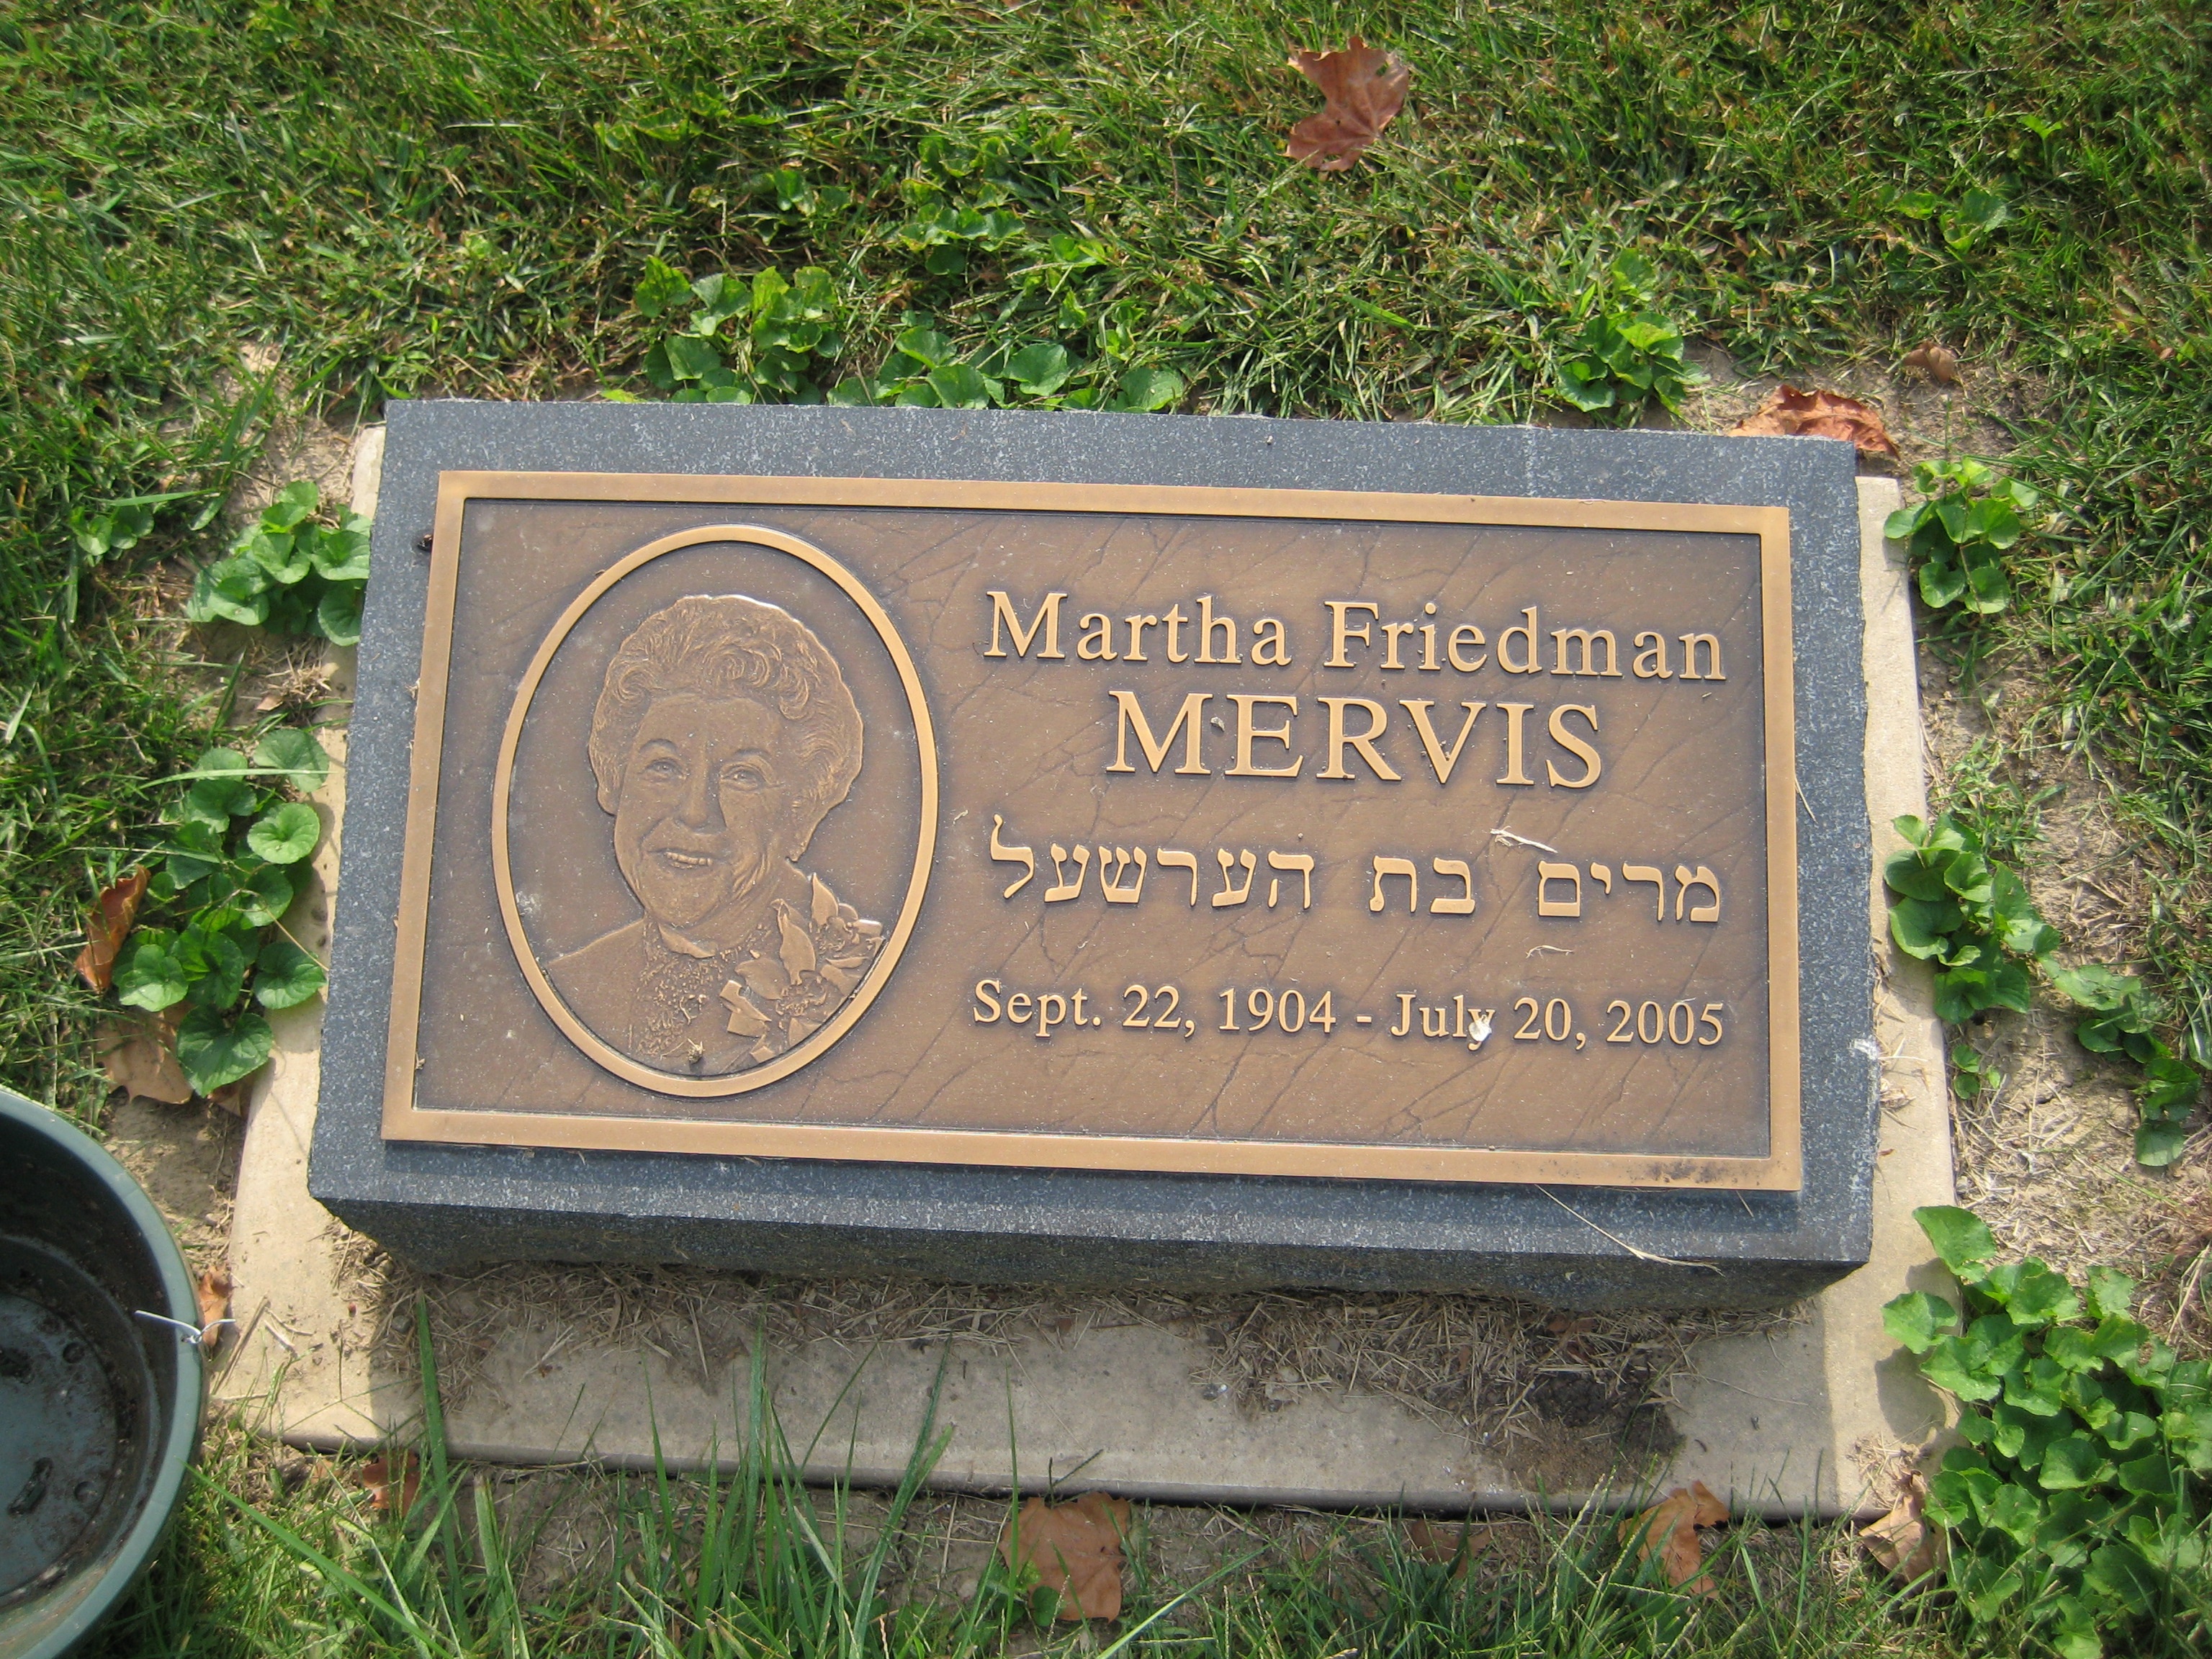 Mervis, Martha Ann (Friedman)